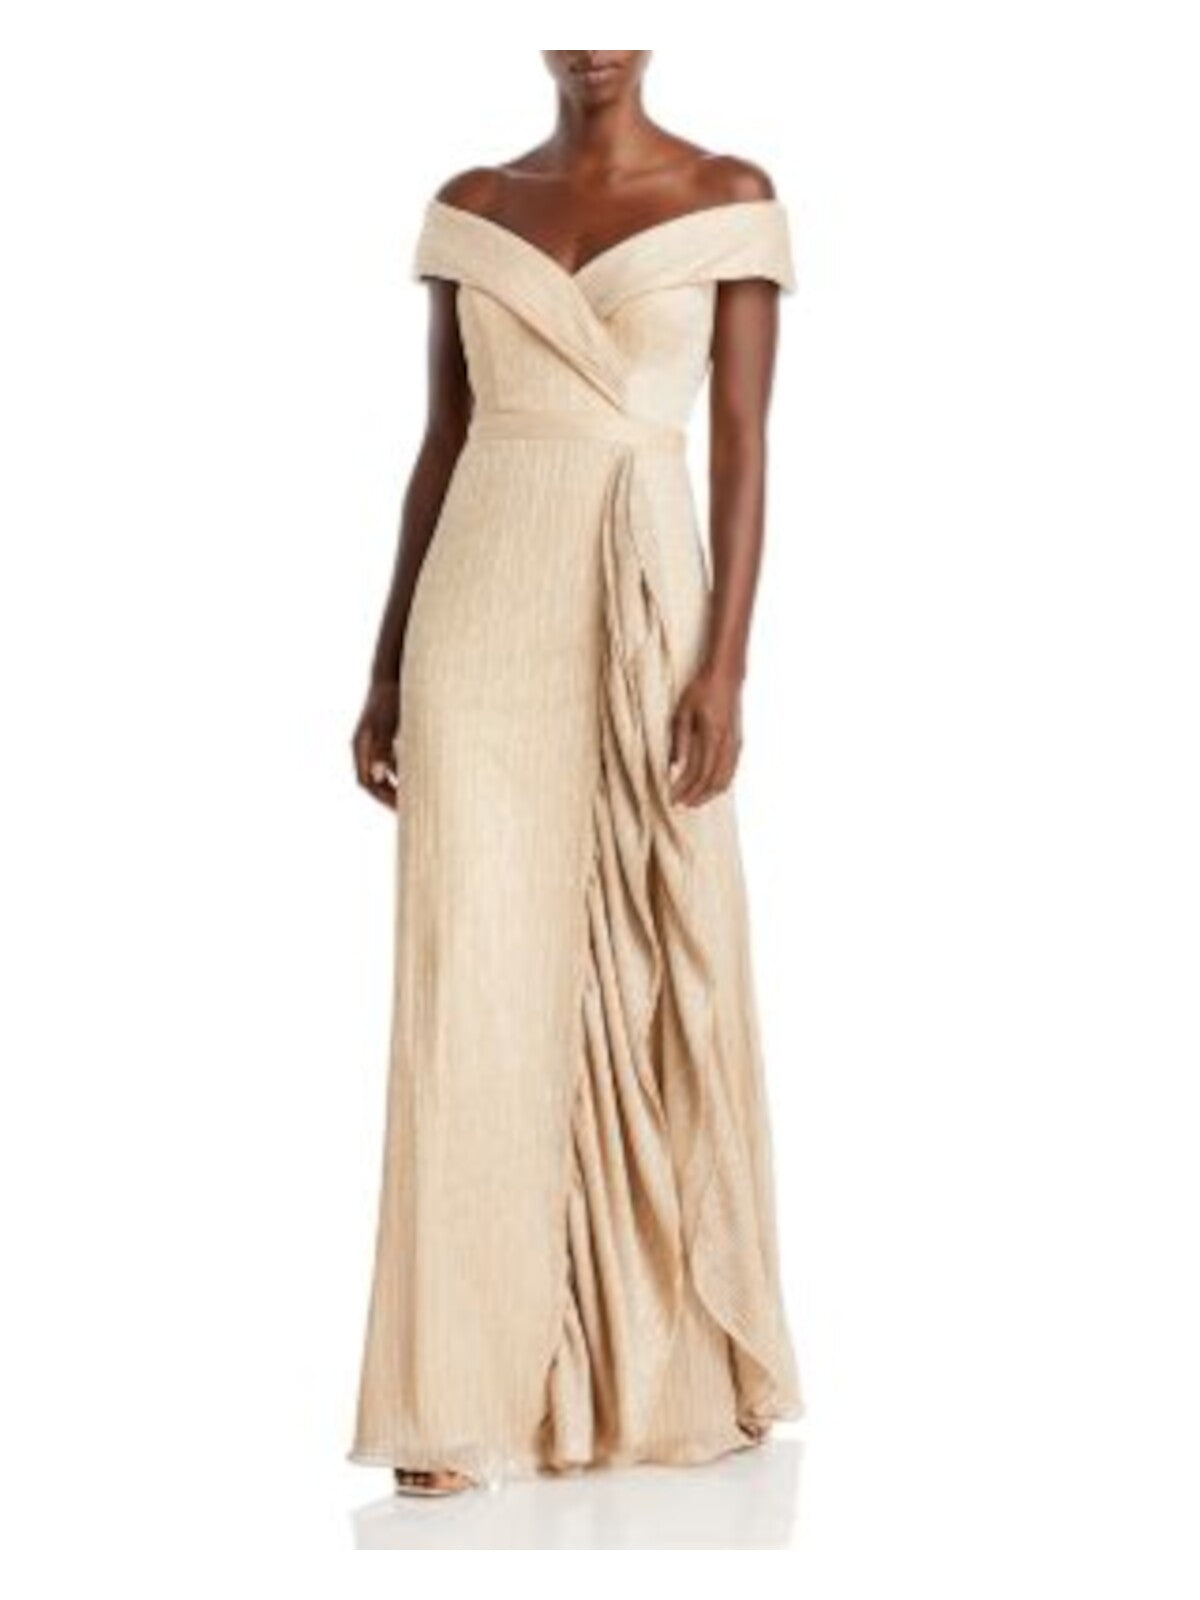 AQUA FORMAL Womens Gold Ruffled Zippered Lined Short Sleeve Off Shoulder Full-Length Evening Gown Dress 2